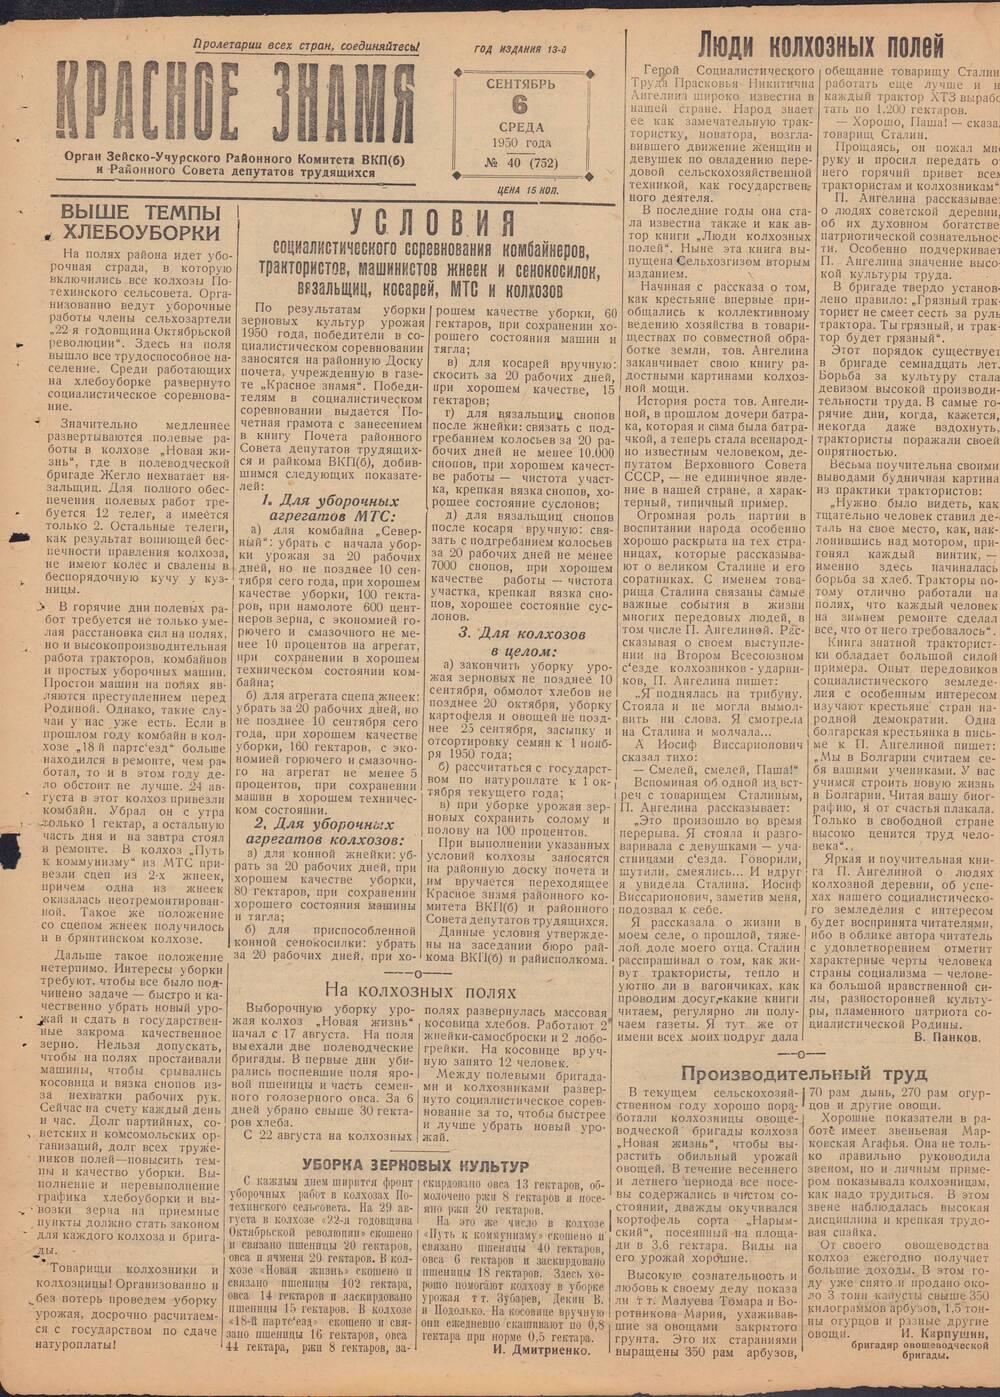 Газета Красное знамя №40 (752) от 6 сентября 1950 года.